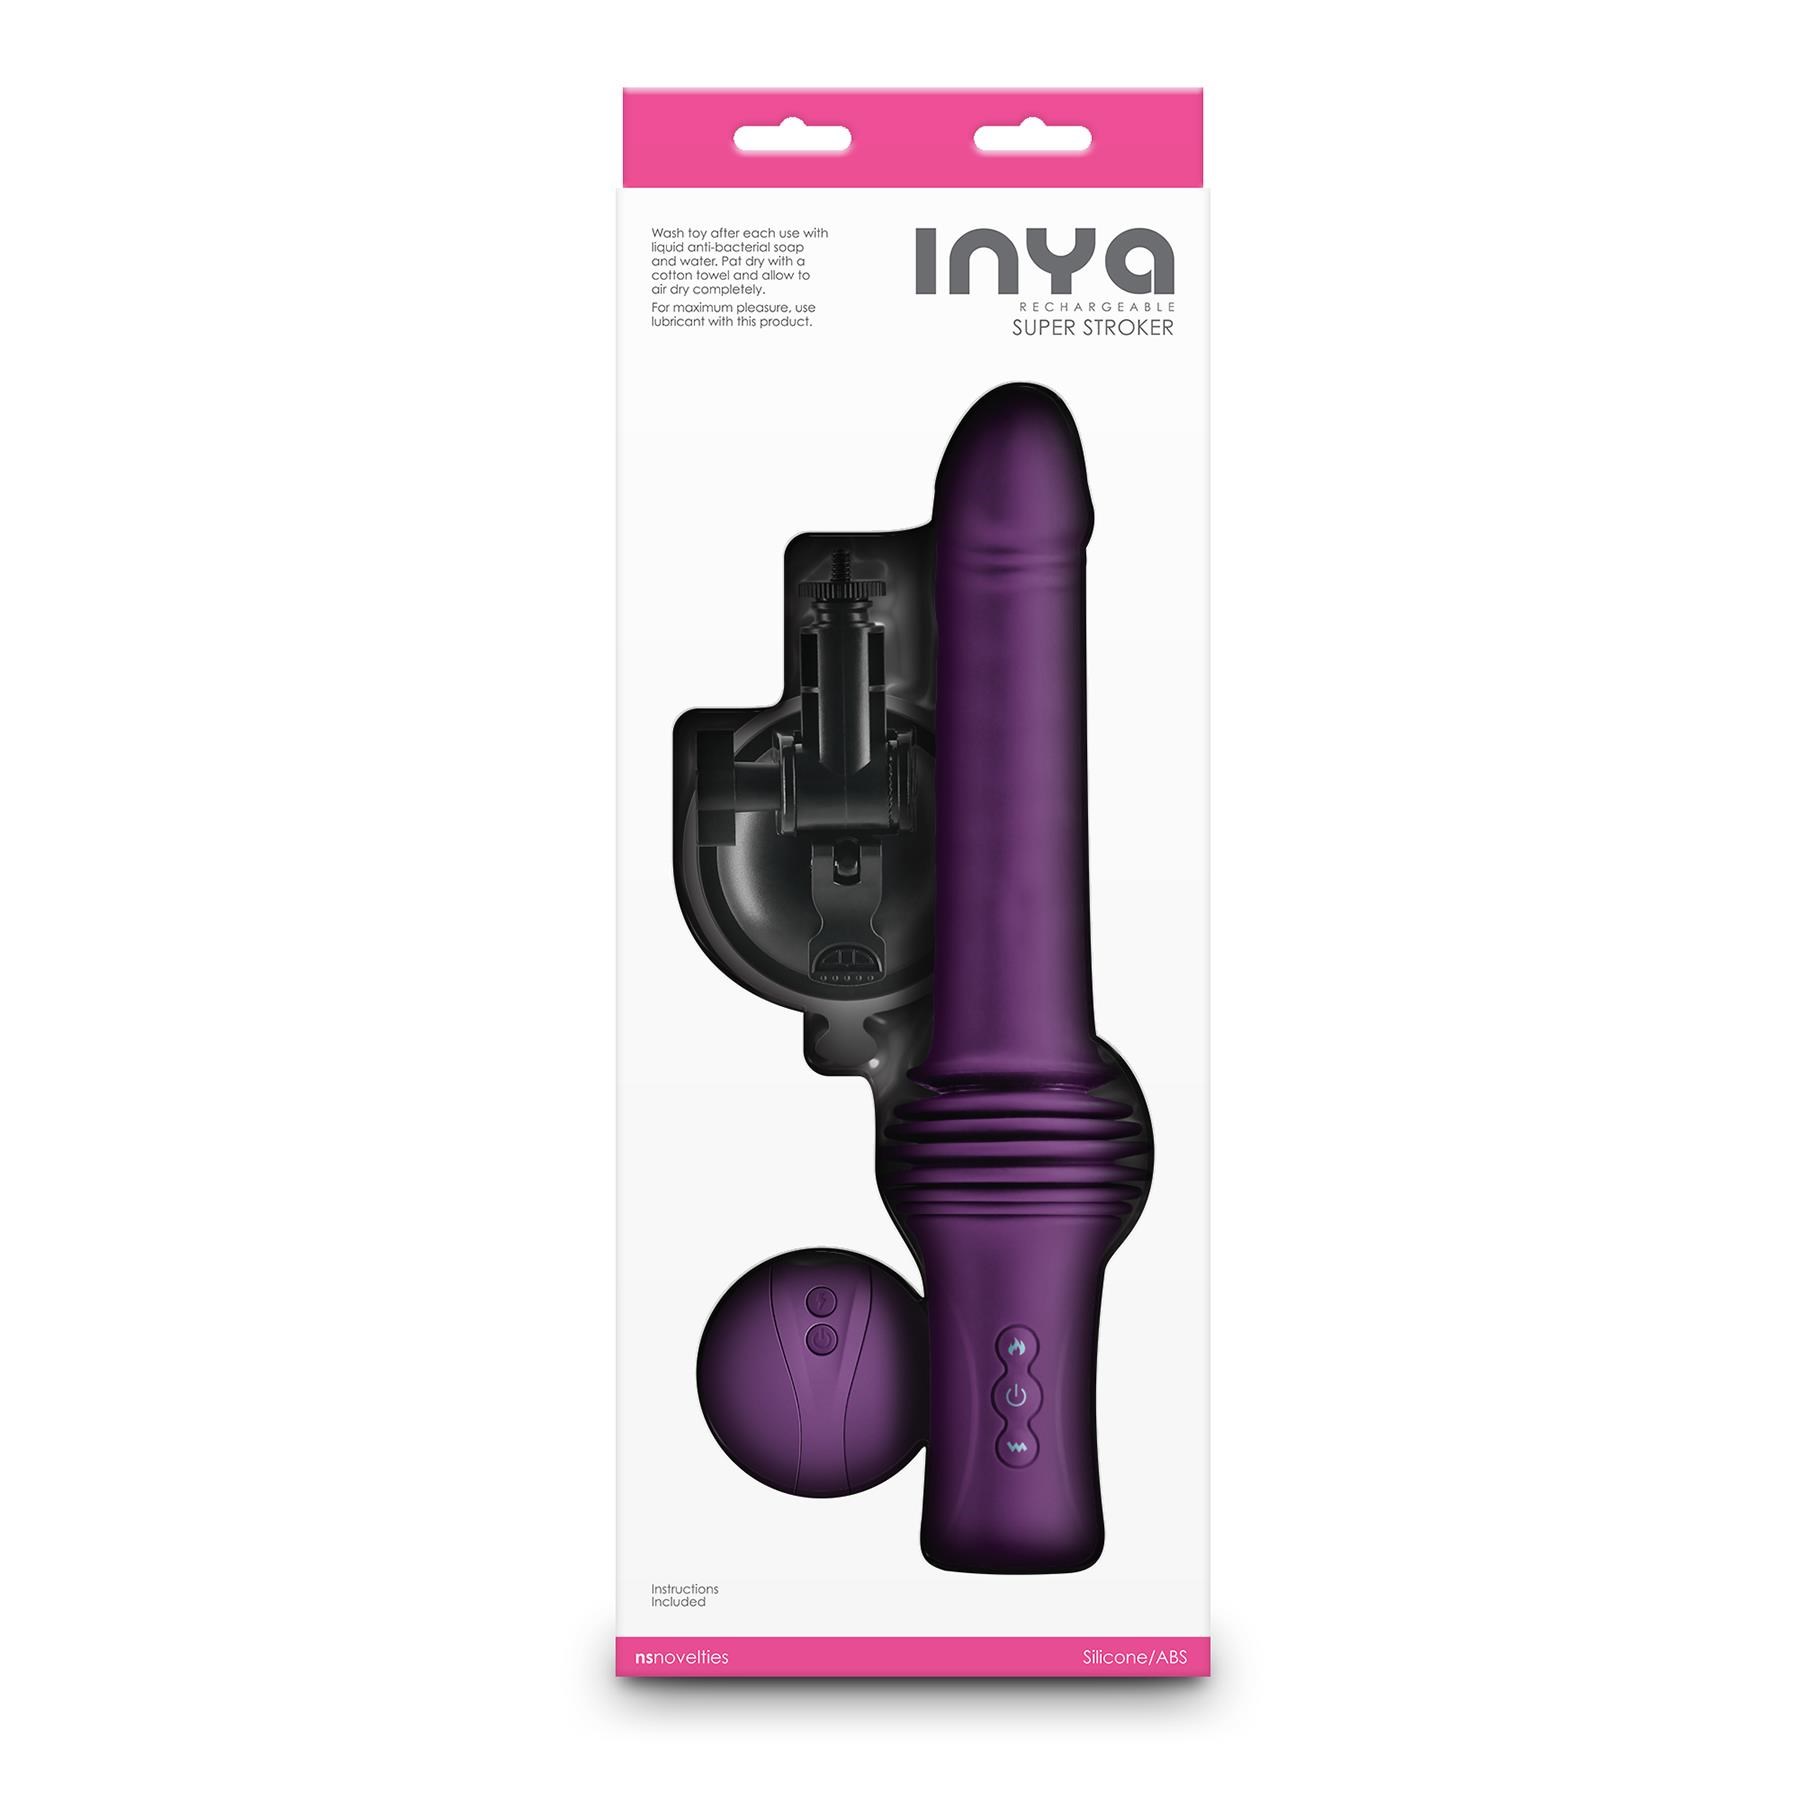 Inya Super Stroker Sex Machine - Packaging